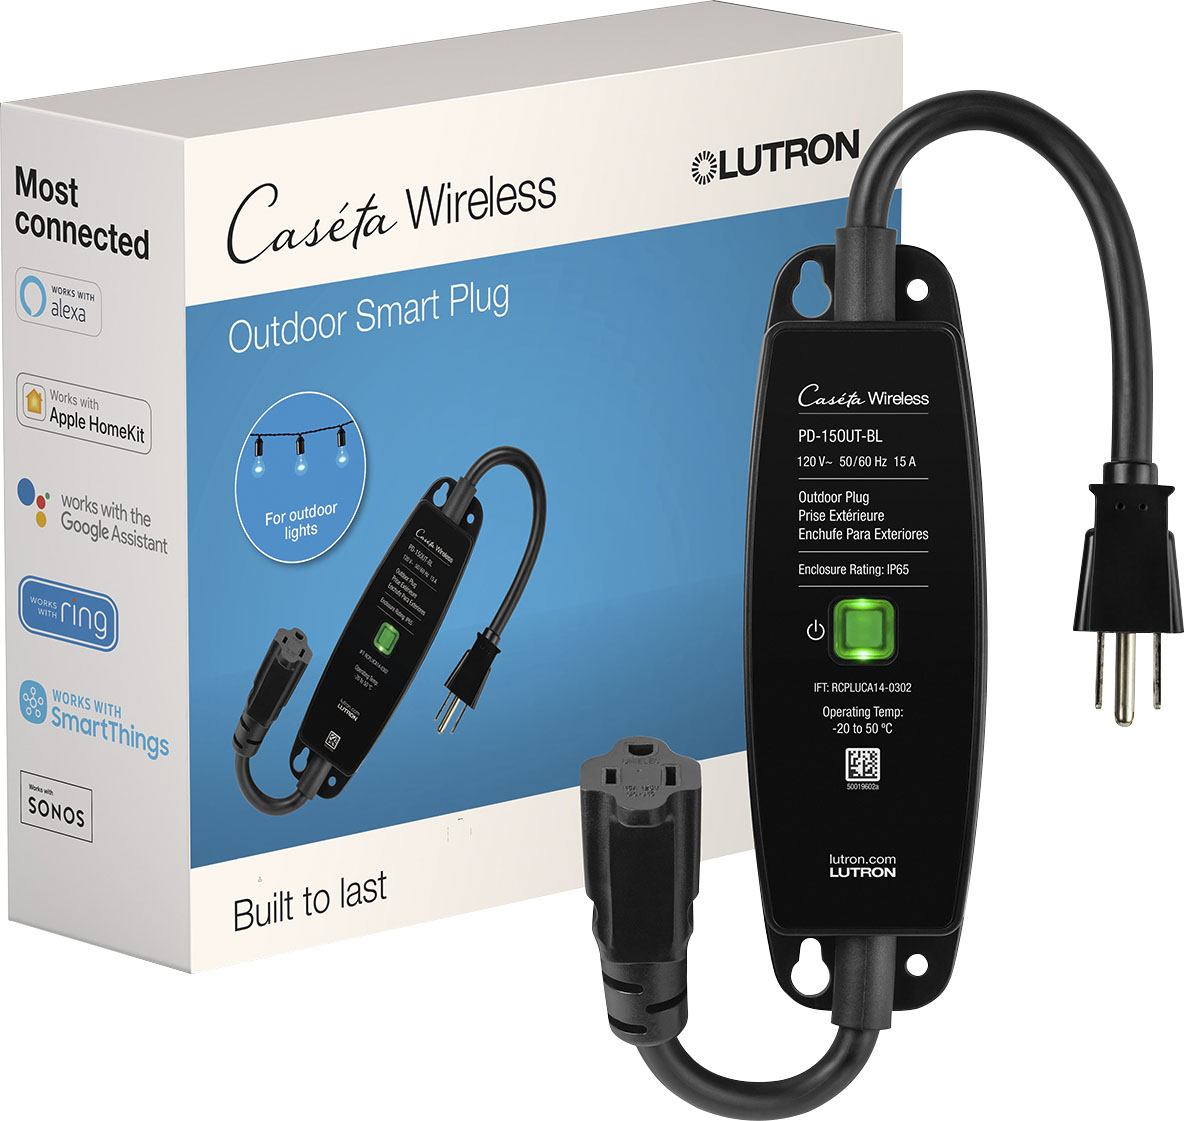 Lutron - Caseta Weatherproof+ Outdoor Smart Plug for Landscape and String Lighting, On/Off Switch, Black - Black